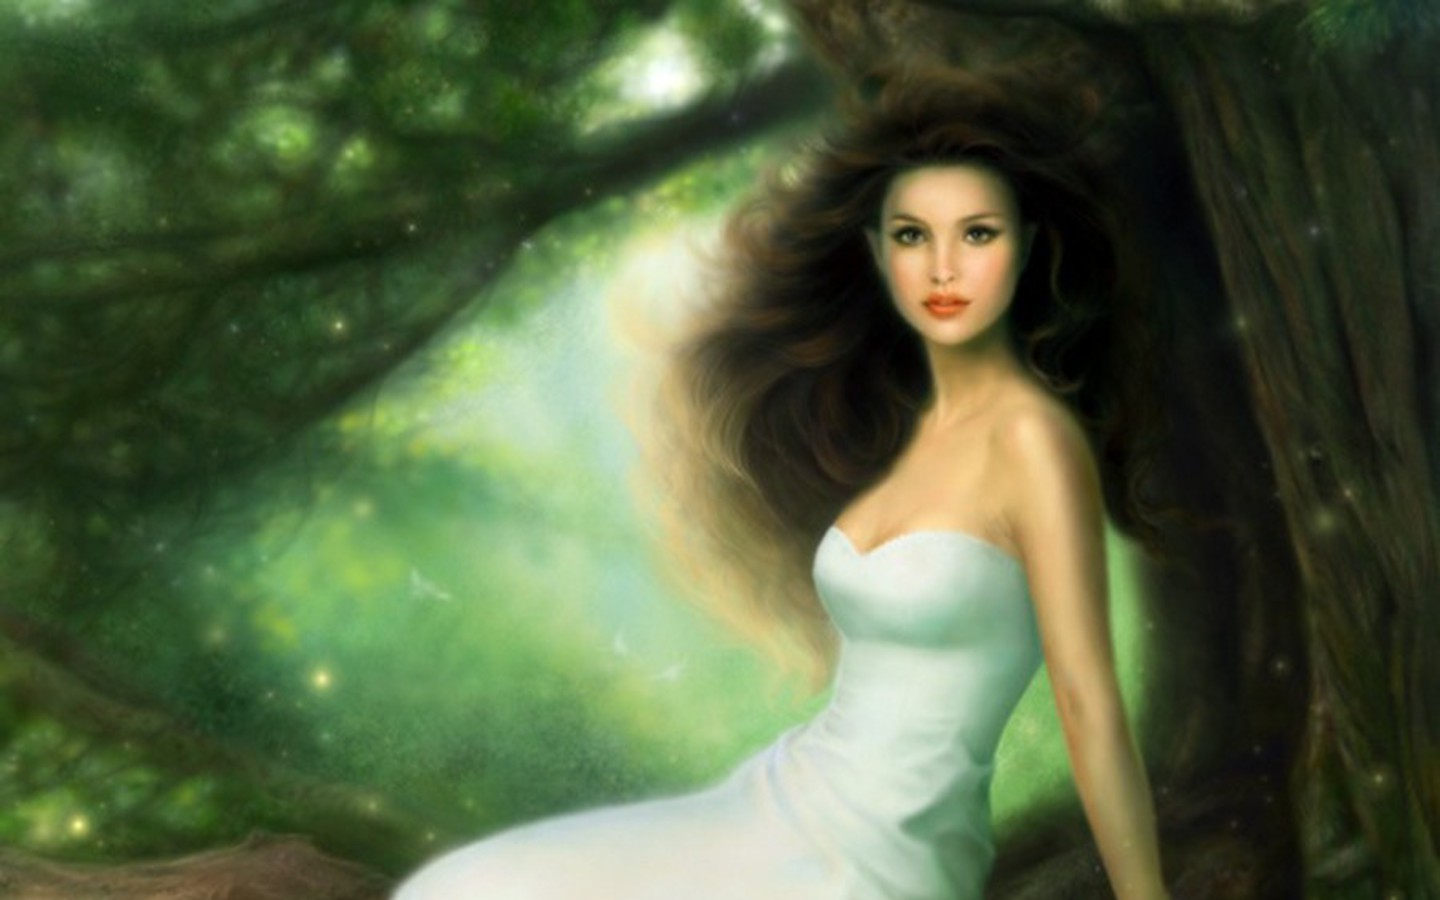 Beautiful Fantasy Girls HQ wallpapers 1440x900 free Download  PIXHOME